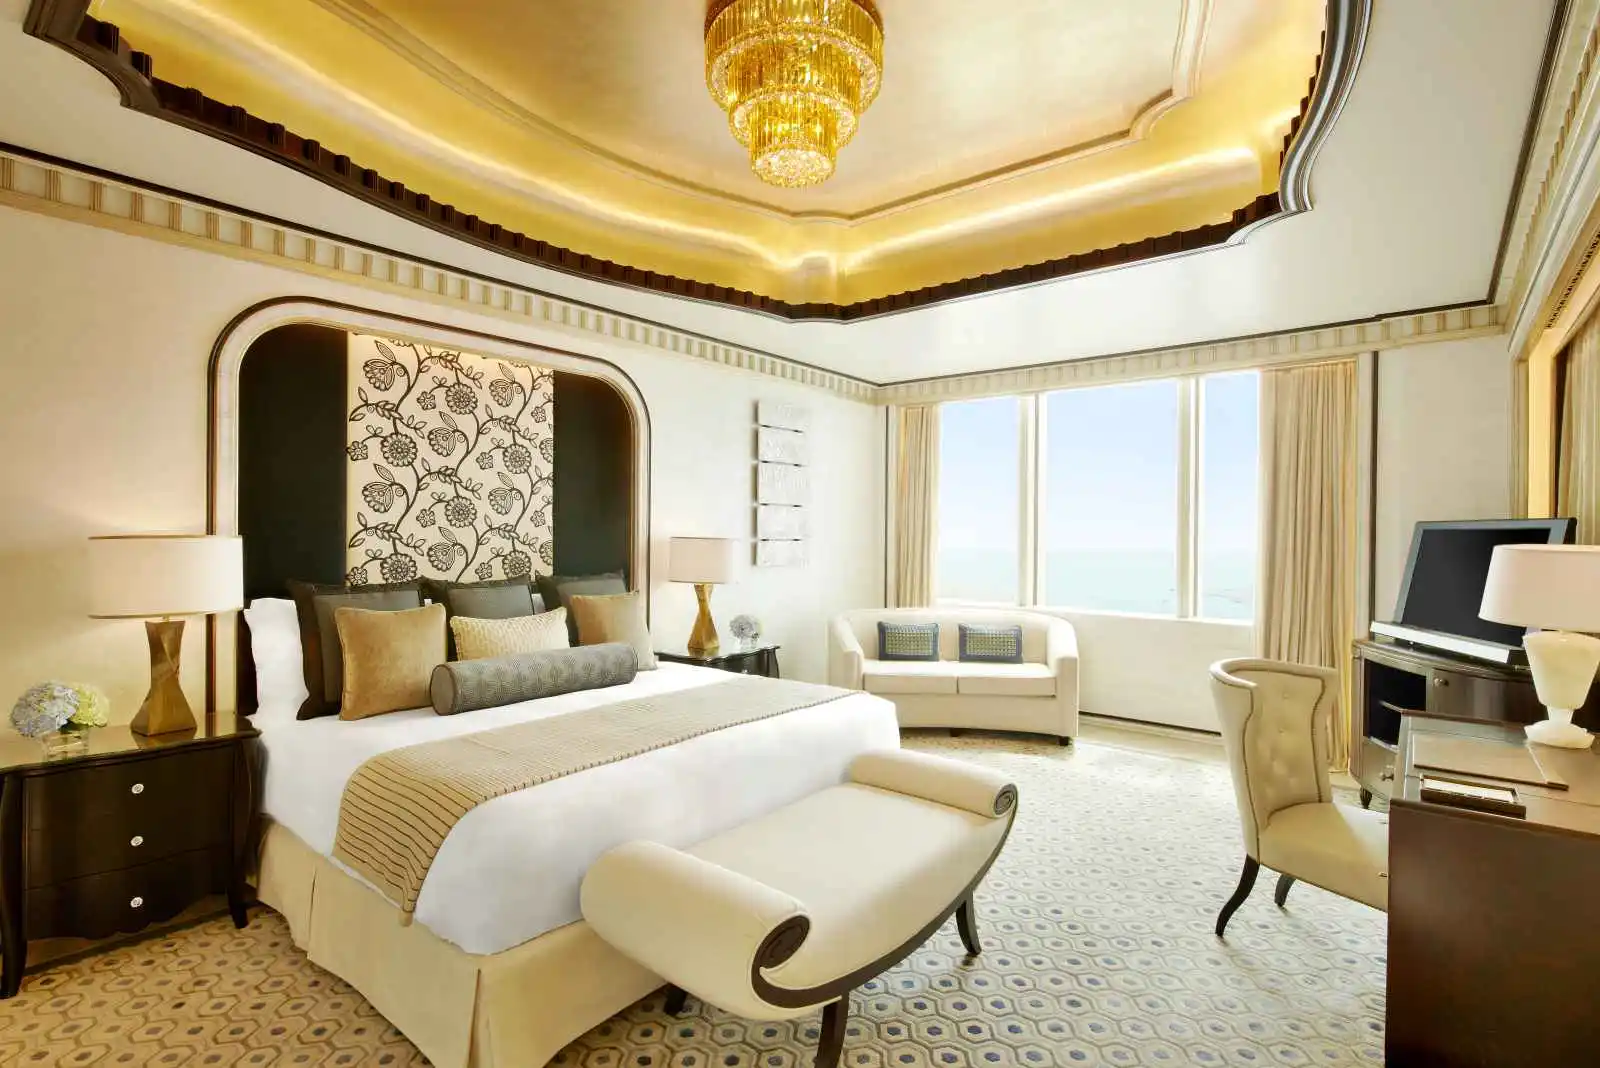 Abu Dhabi Suite, The St. Regis, Abou Dhabi